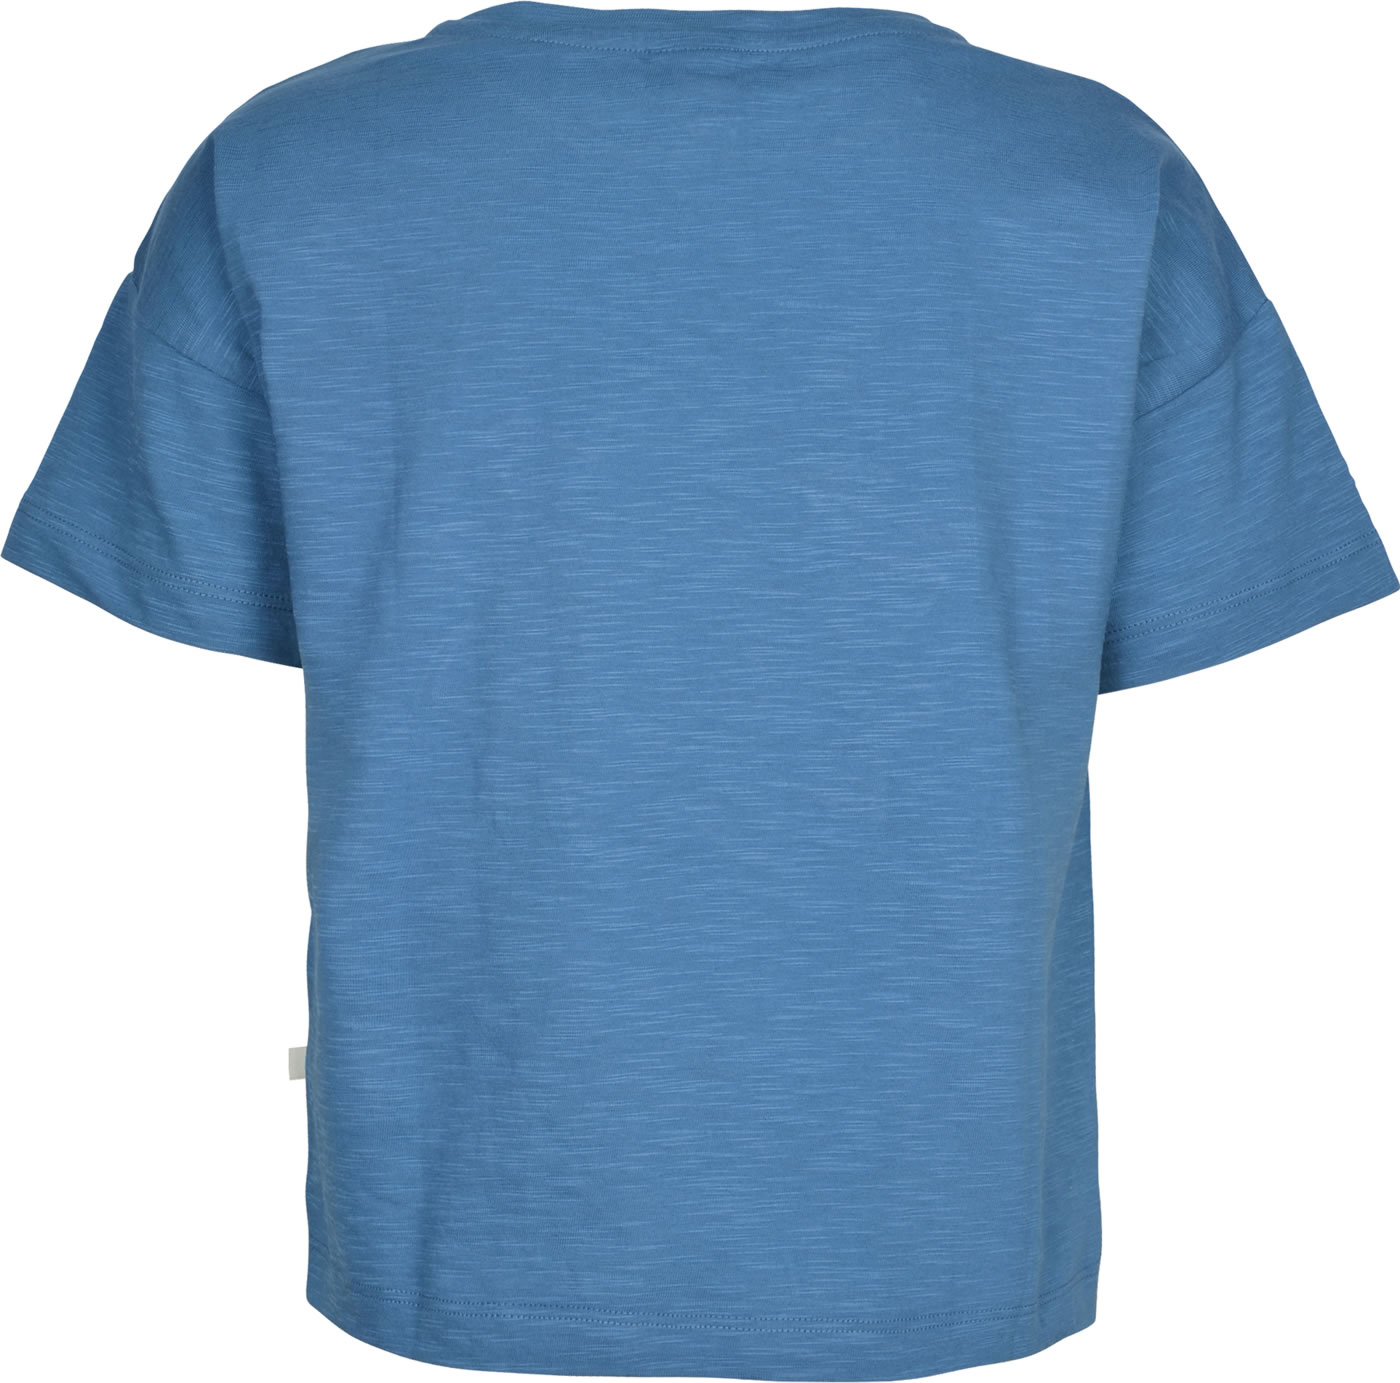 Frugi T-Shirt Kurzarm MYLA FLOWER steely blue kaufen | papiton.de